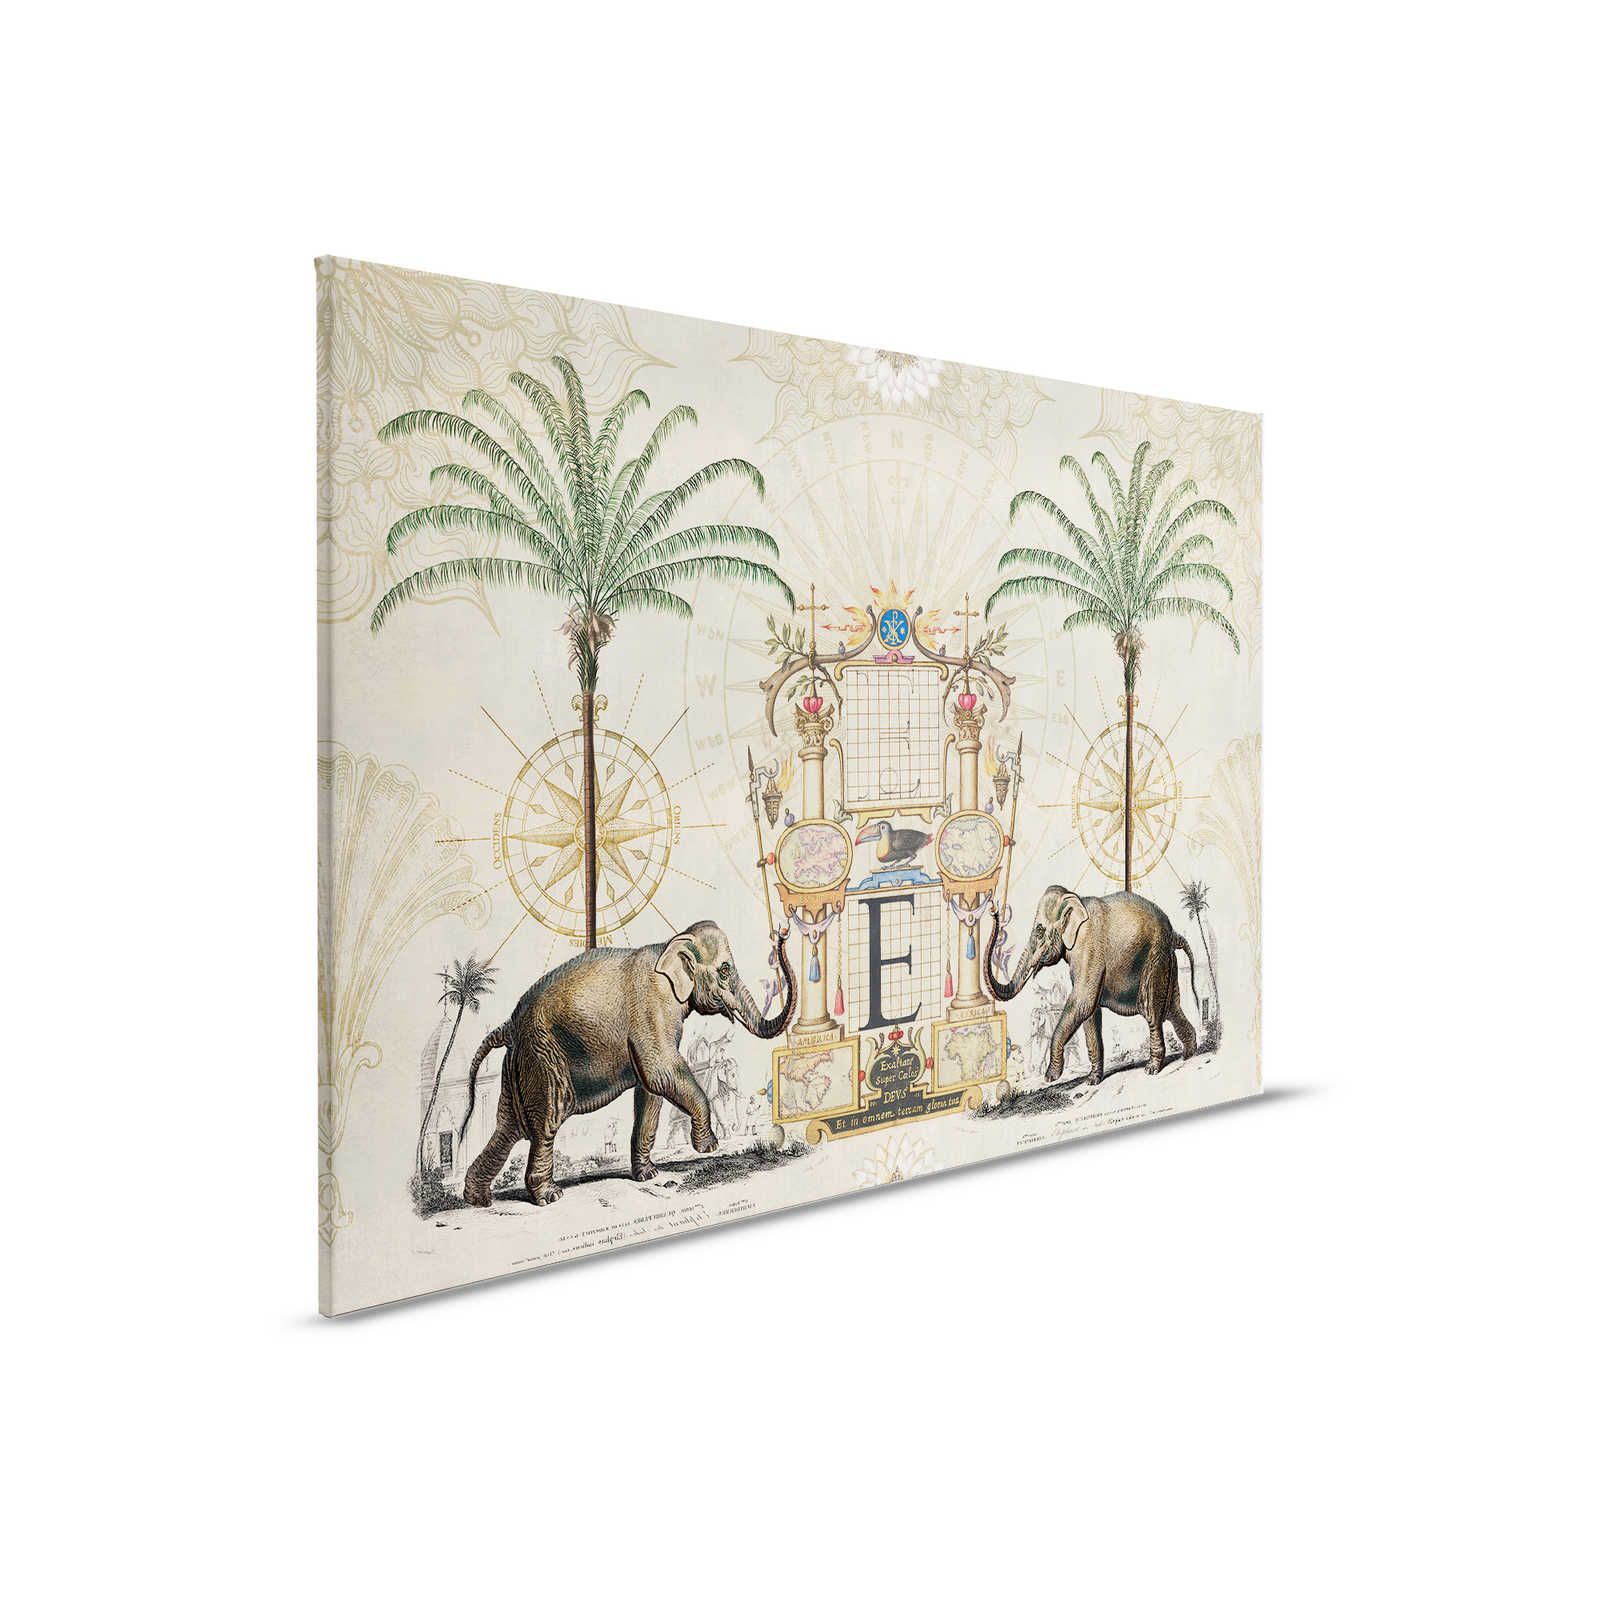         Nostalgia Canvas Painting with Vintage Elephant Pattern - 0.90 m x 0.60 m
    